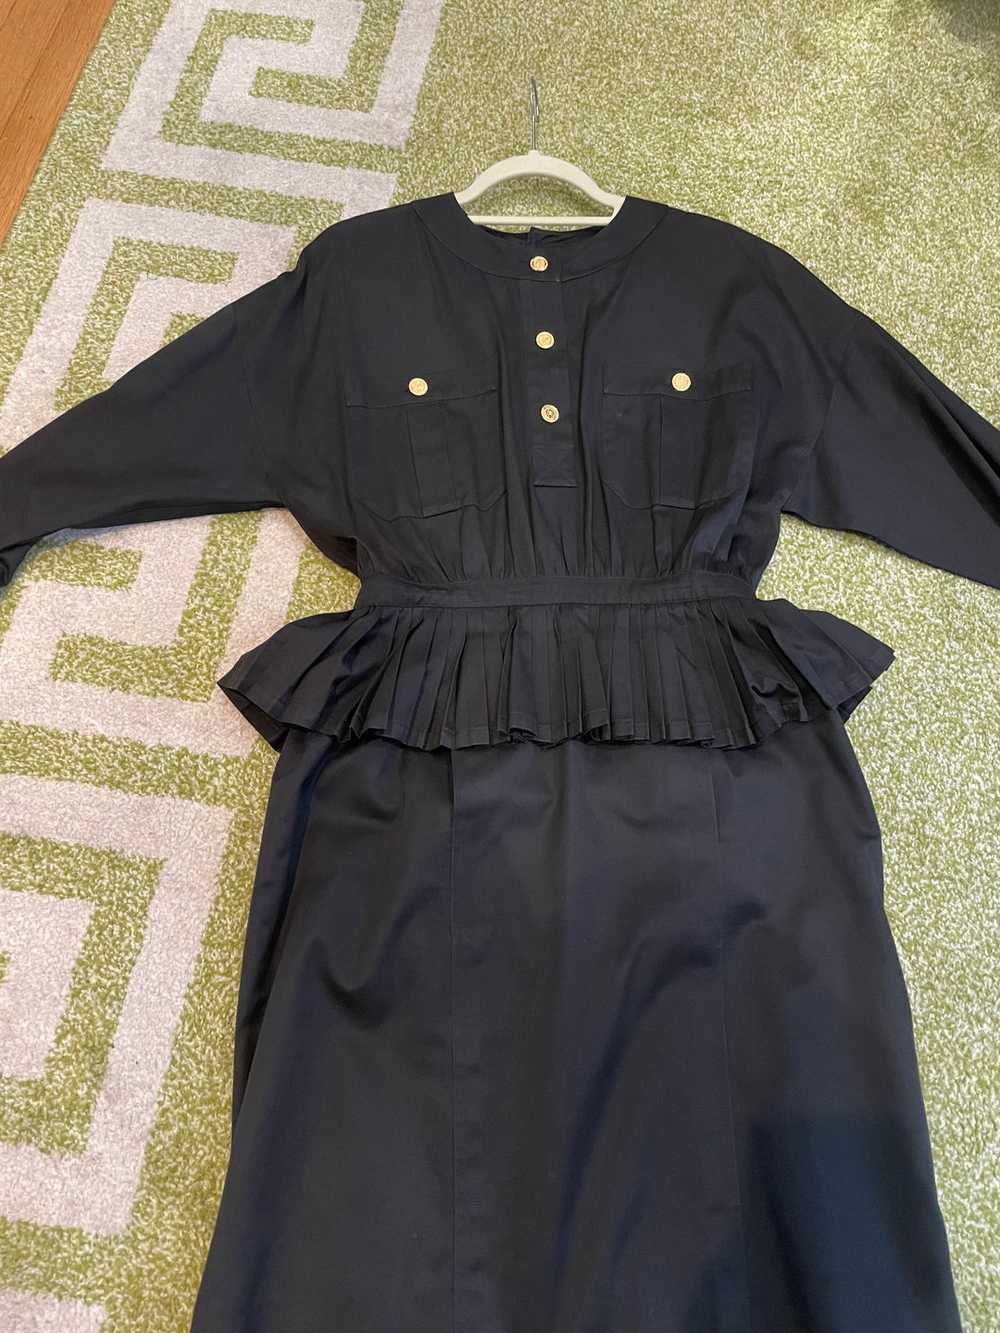 Chanel Black Cotton Dress (Size 4) - image 8